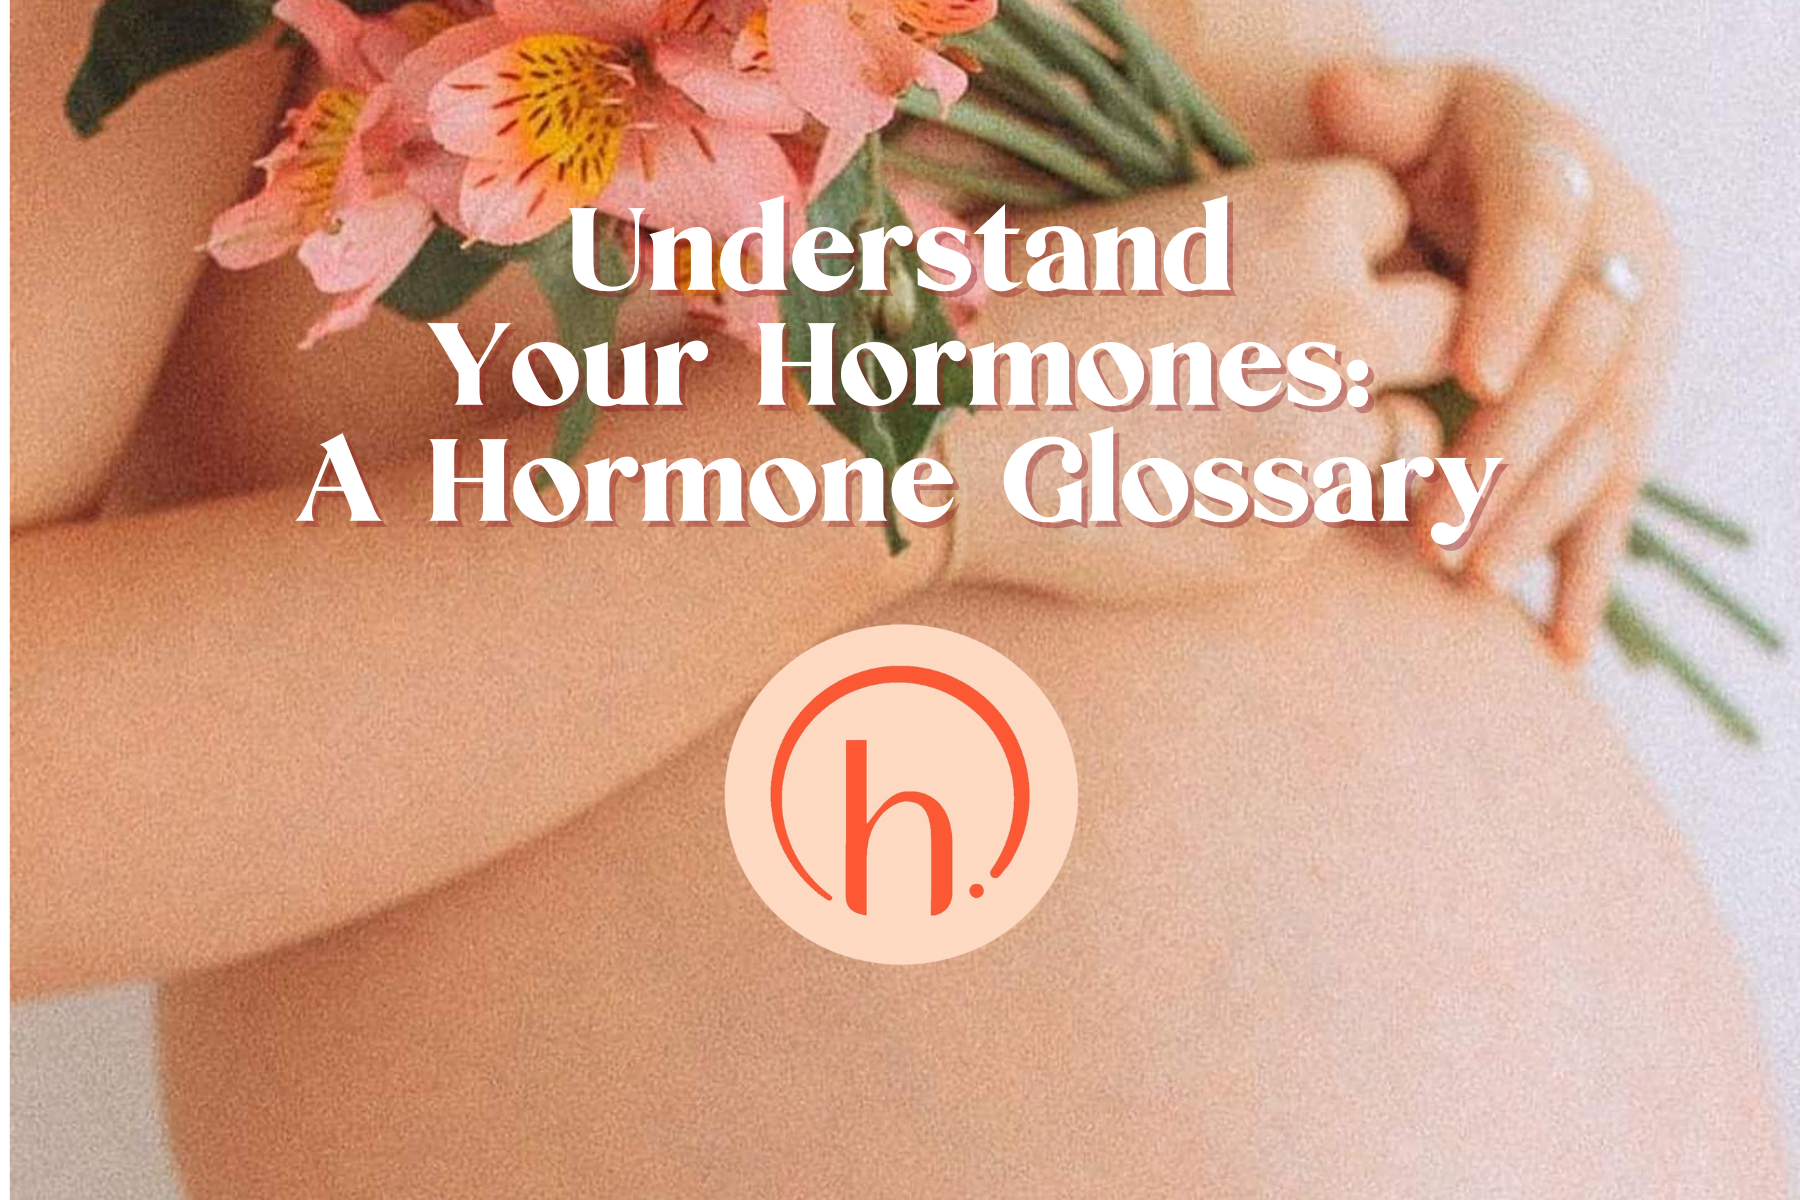 Hormone Glossary: Understand Your Hormones Better